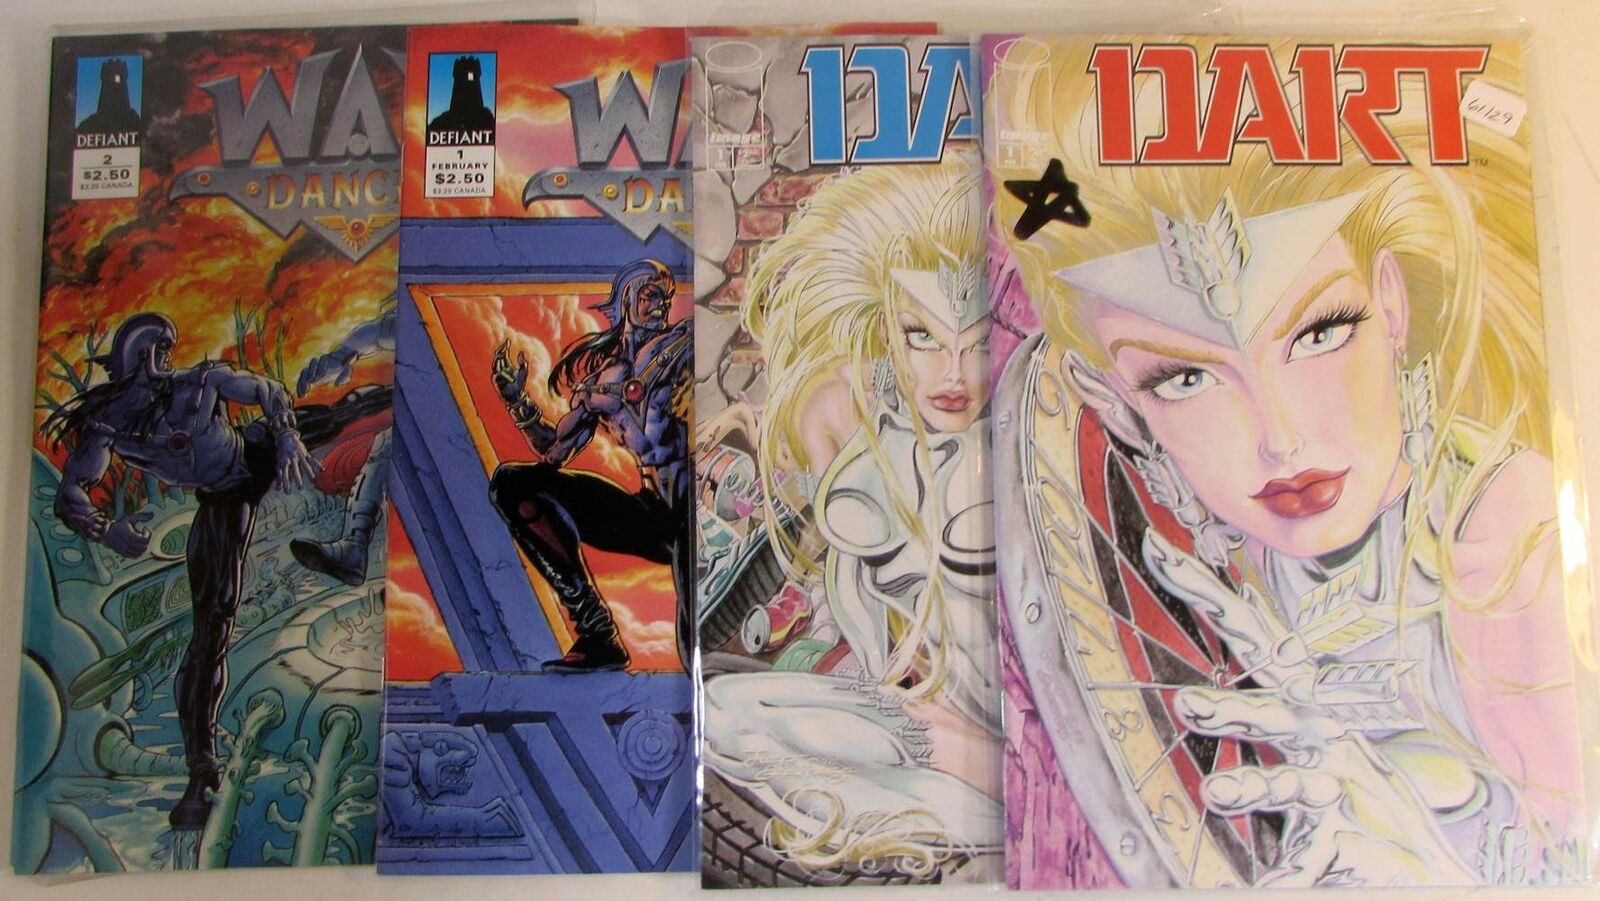 1996 Mixed Lot of 4 #War Dancer 1, 2, Dart 1, 1 b Defiant Comic Books